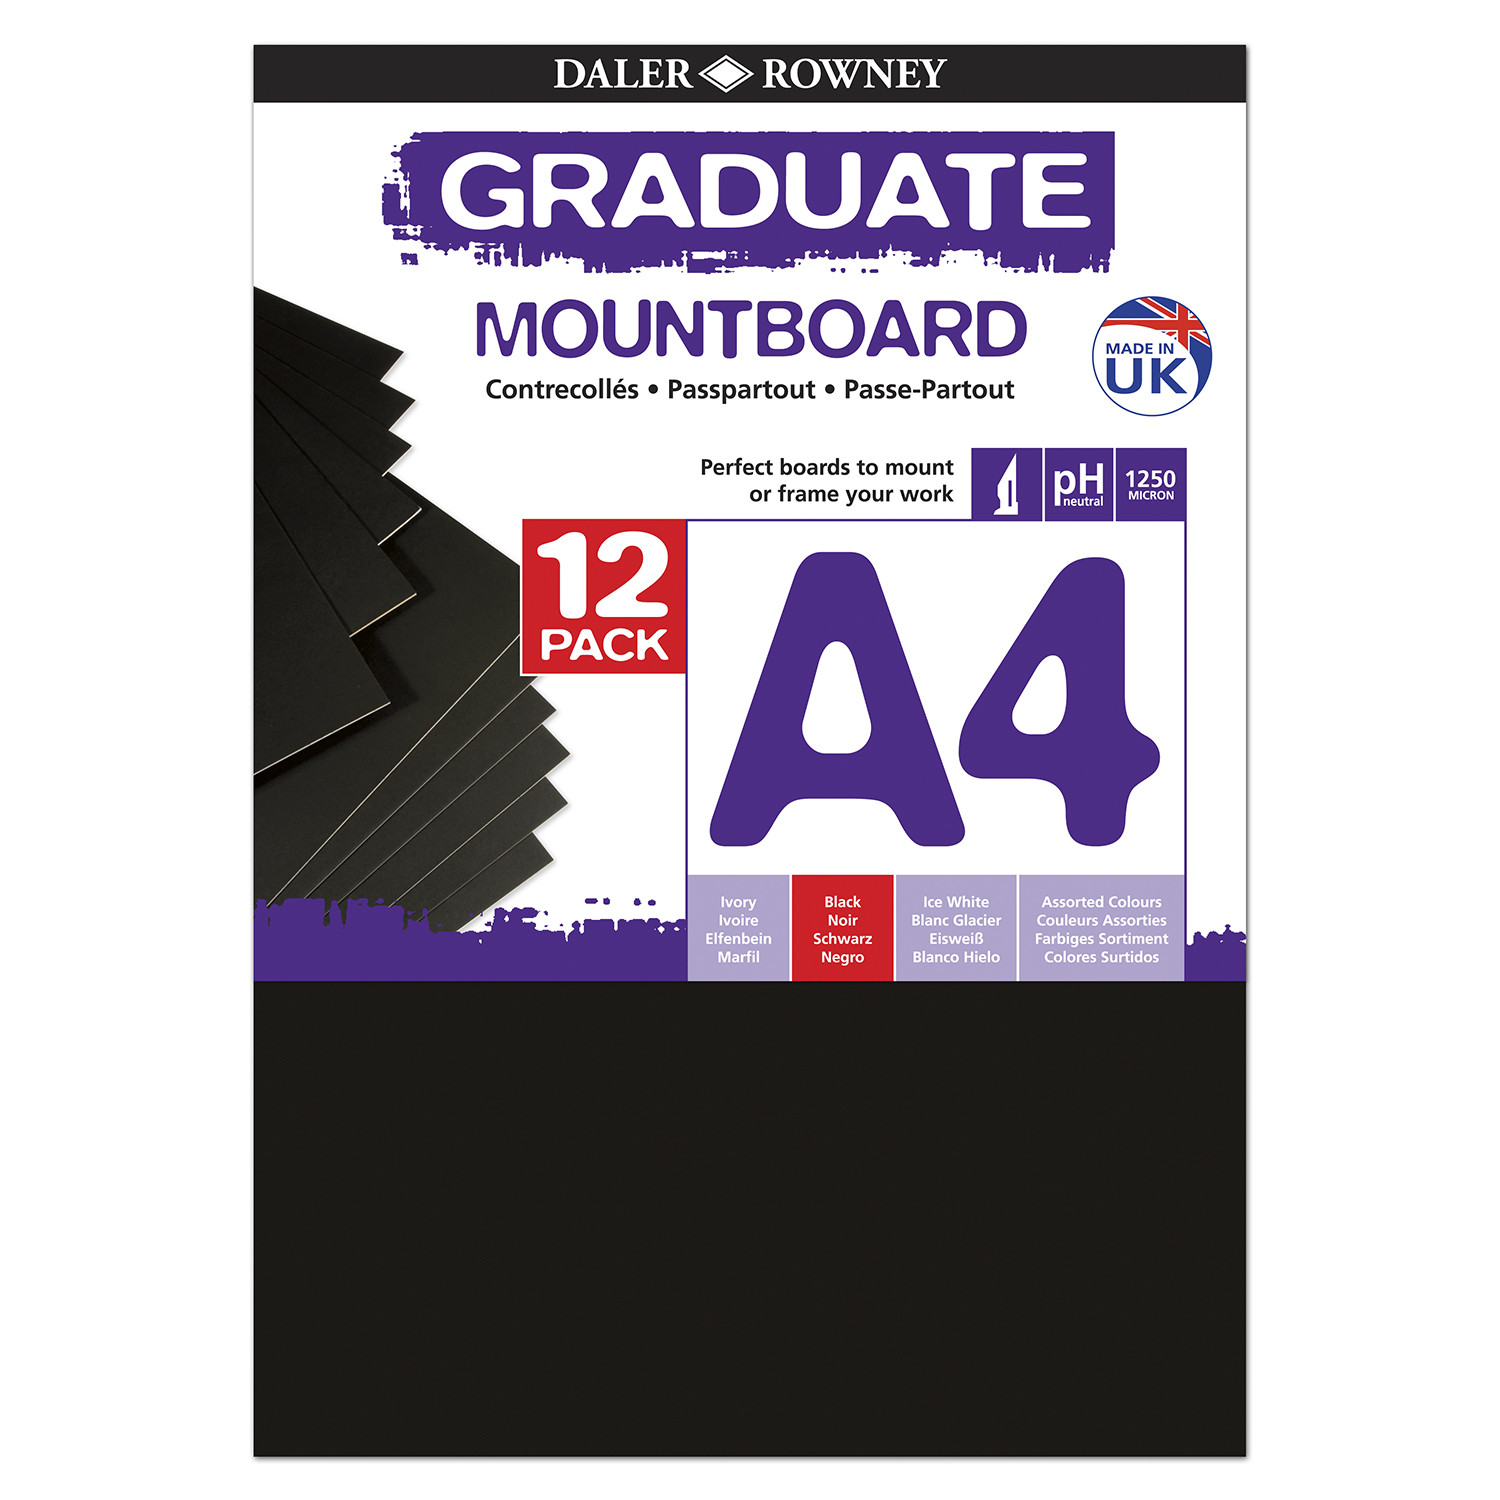 A4 Graduate Mountboard 12Pk - Black Image